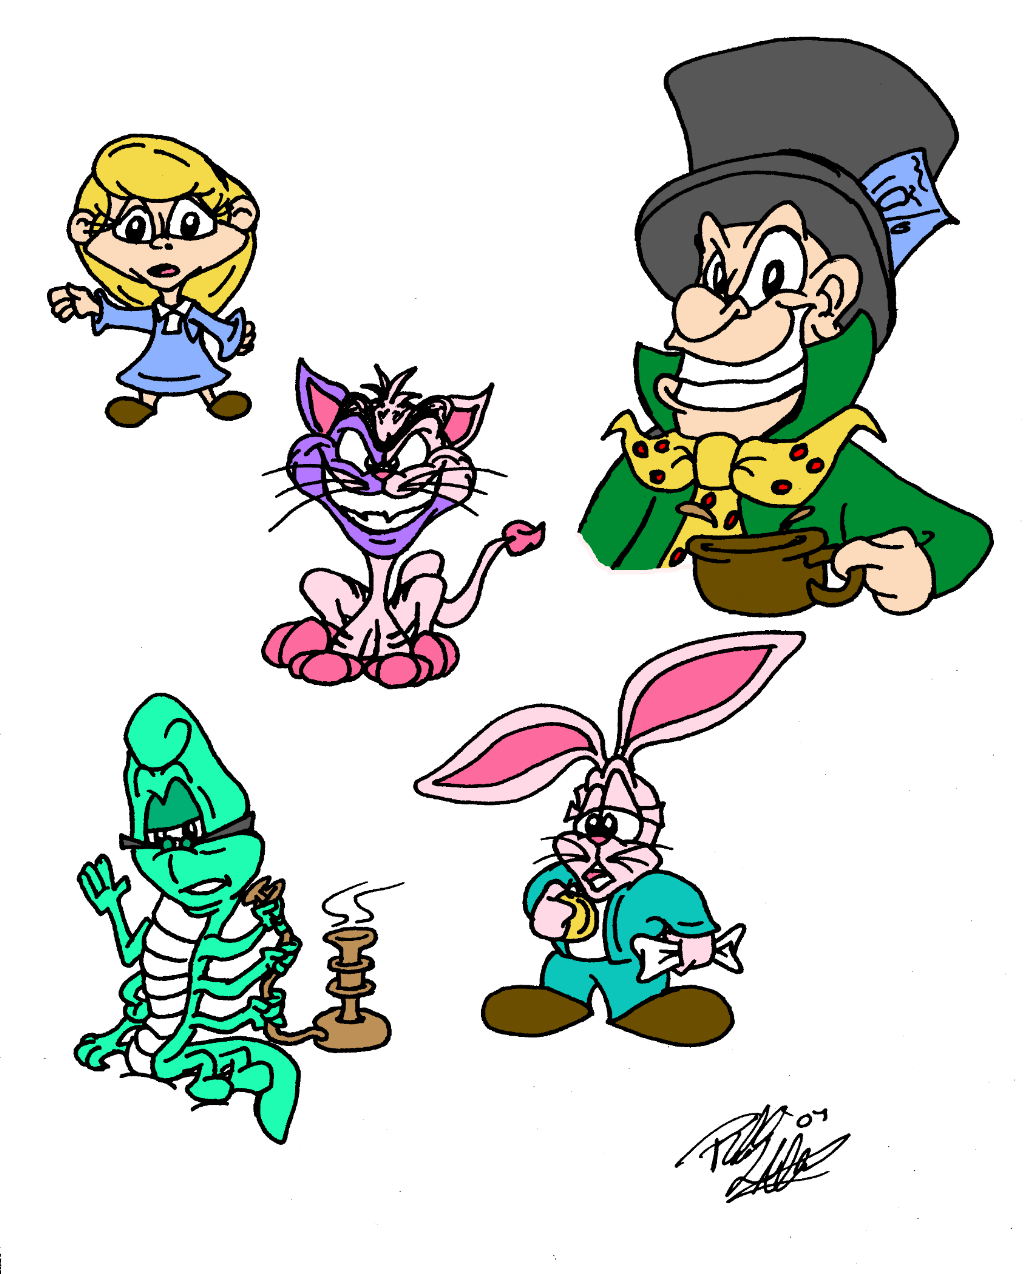 The Wonderland Crew by CartooninRob